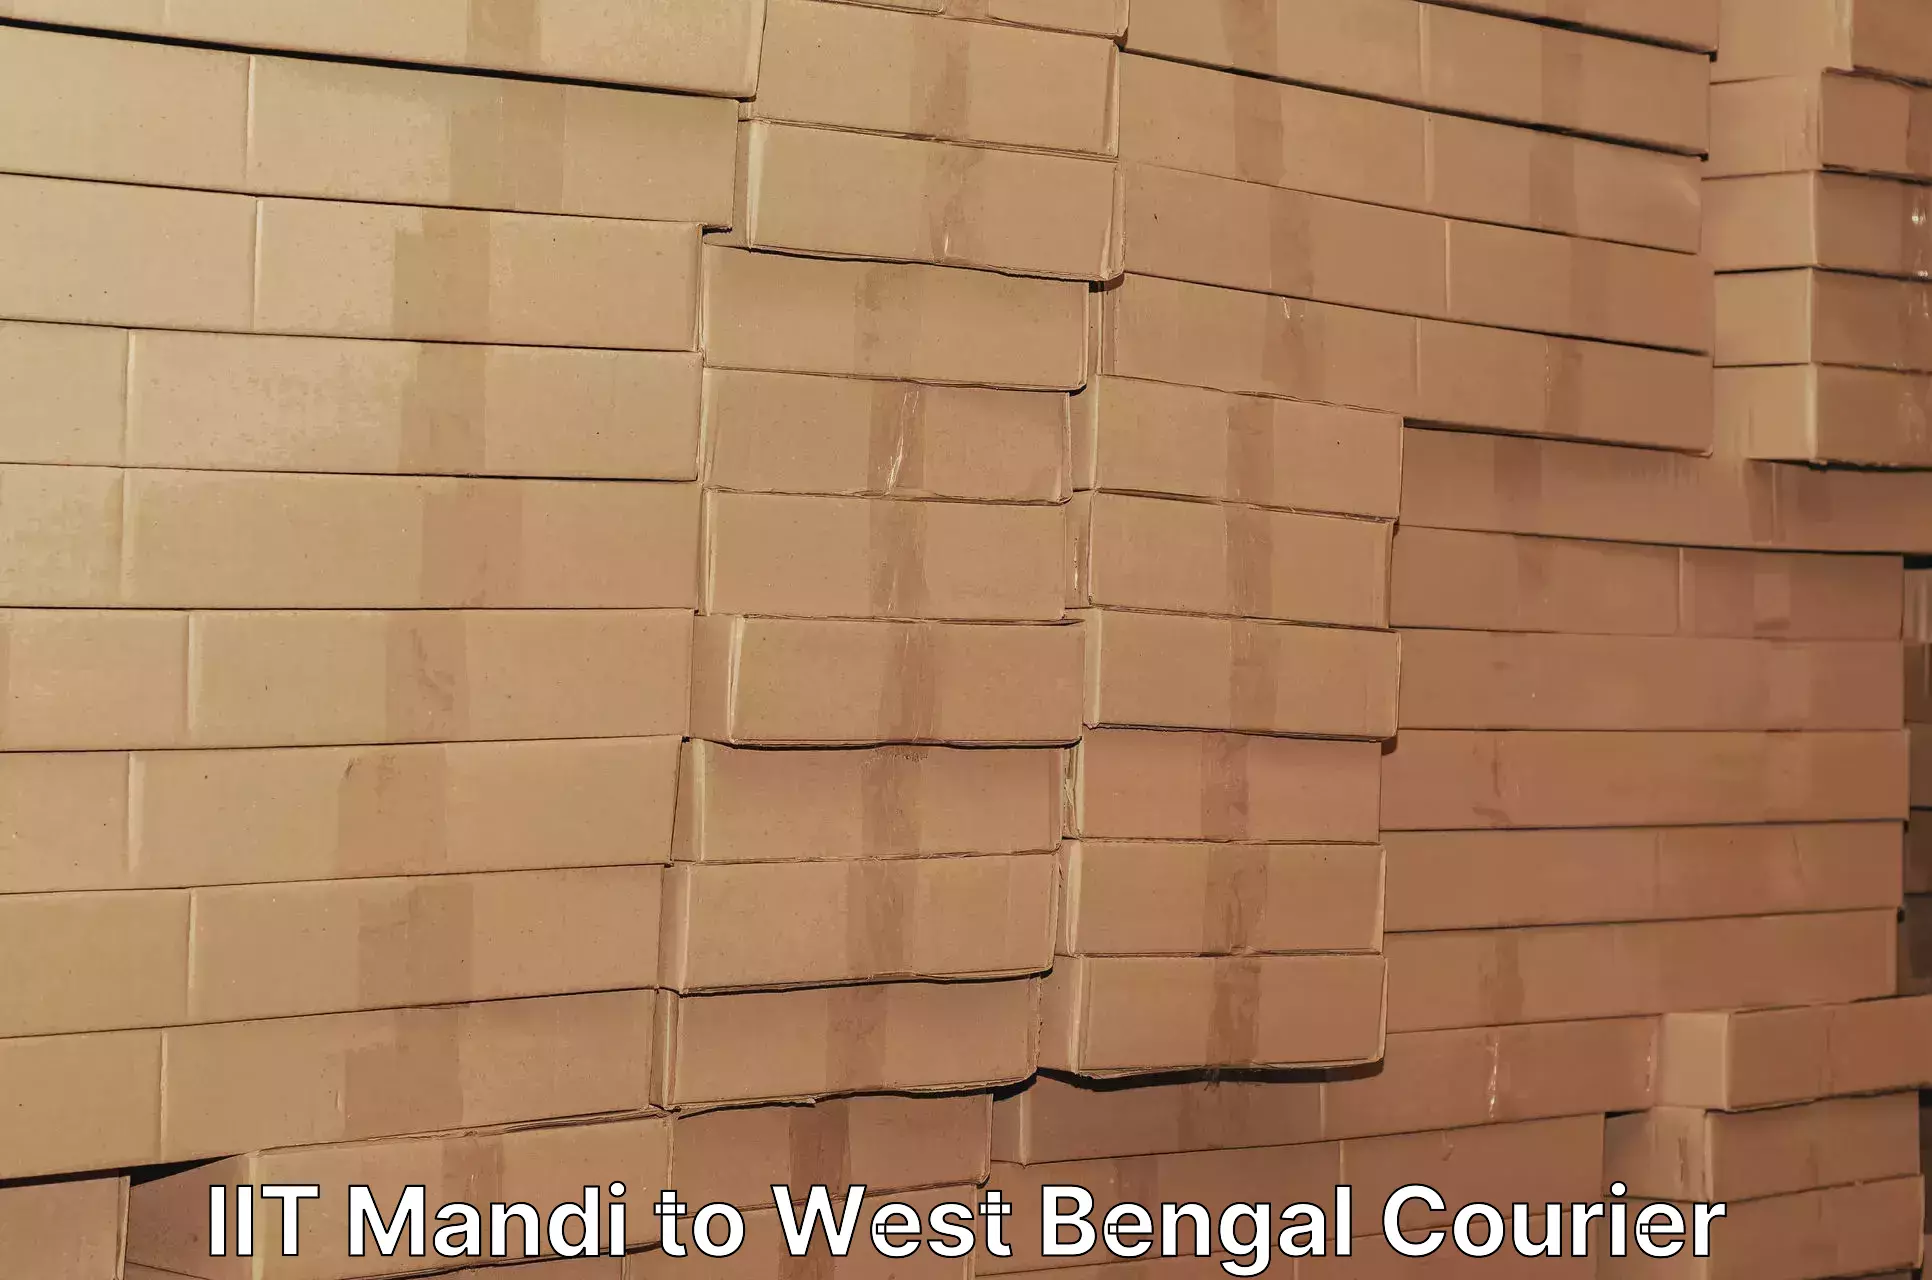 Digital courier platforms IIT Mandi to West Bengal